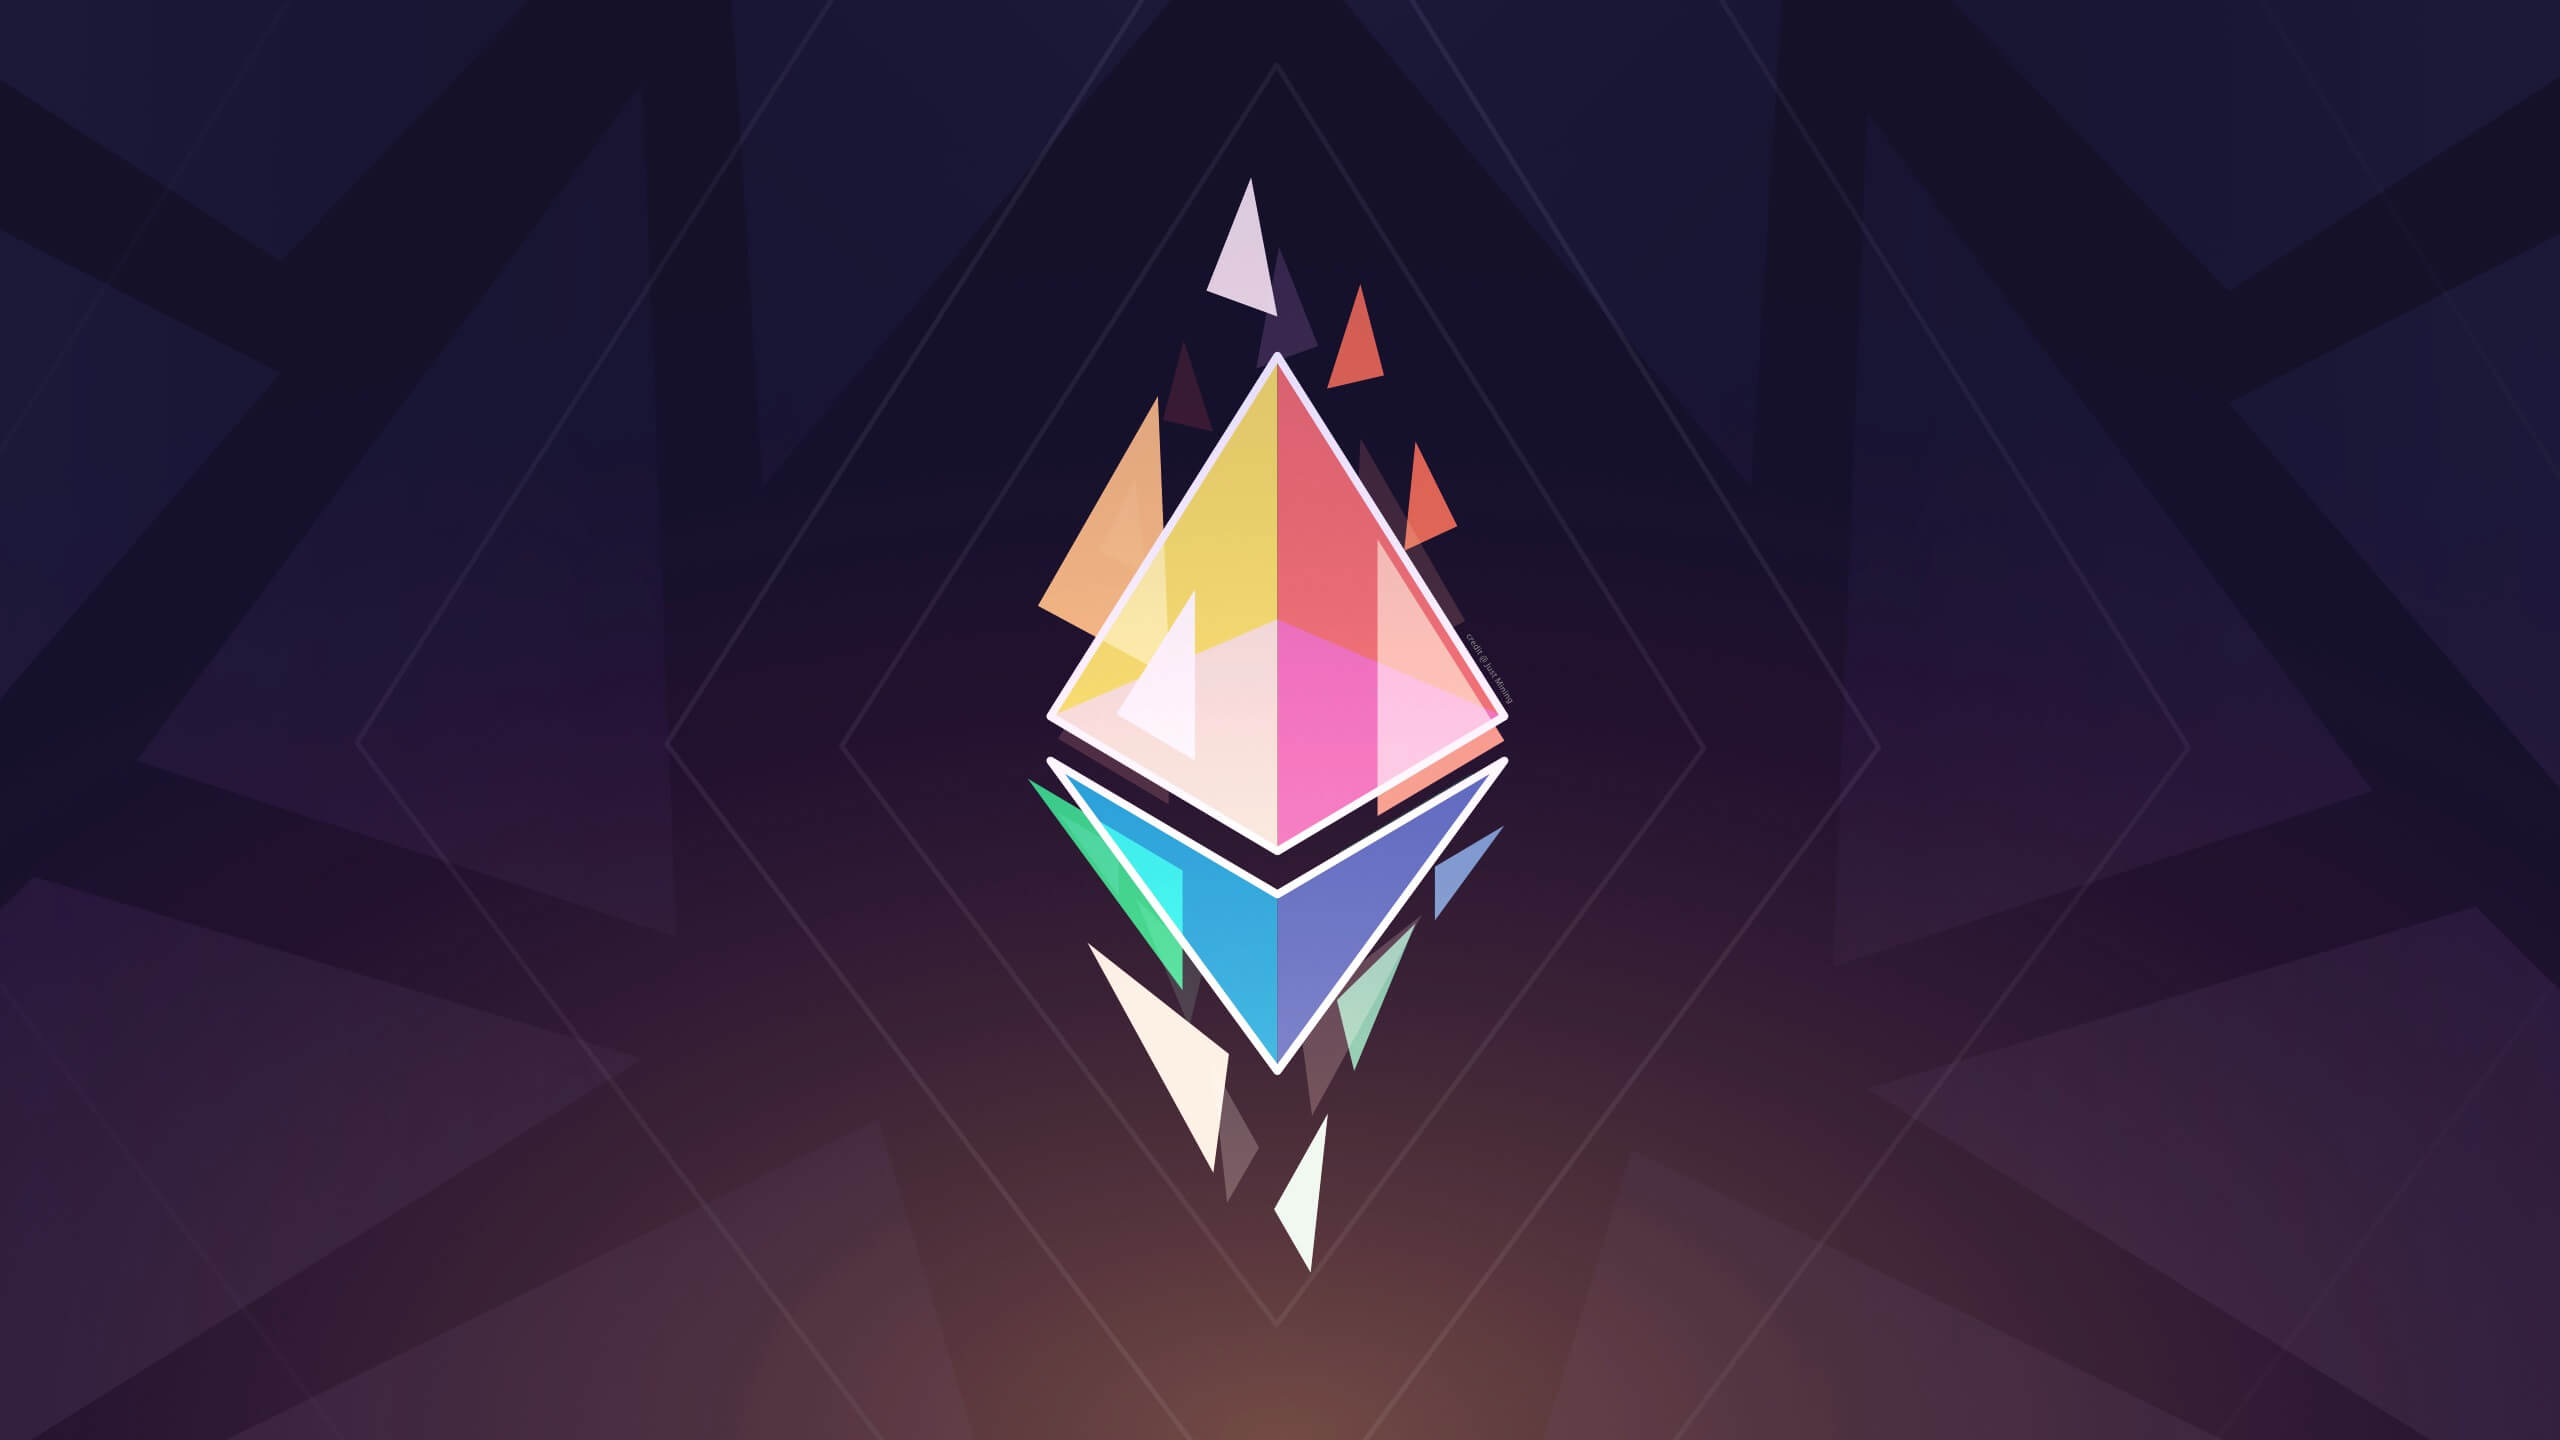 Image of a rainbow ethereum logo on a dark background.